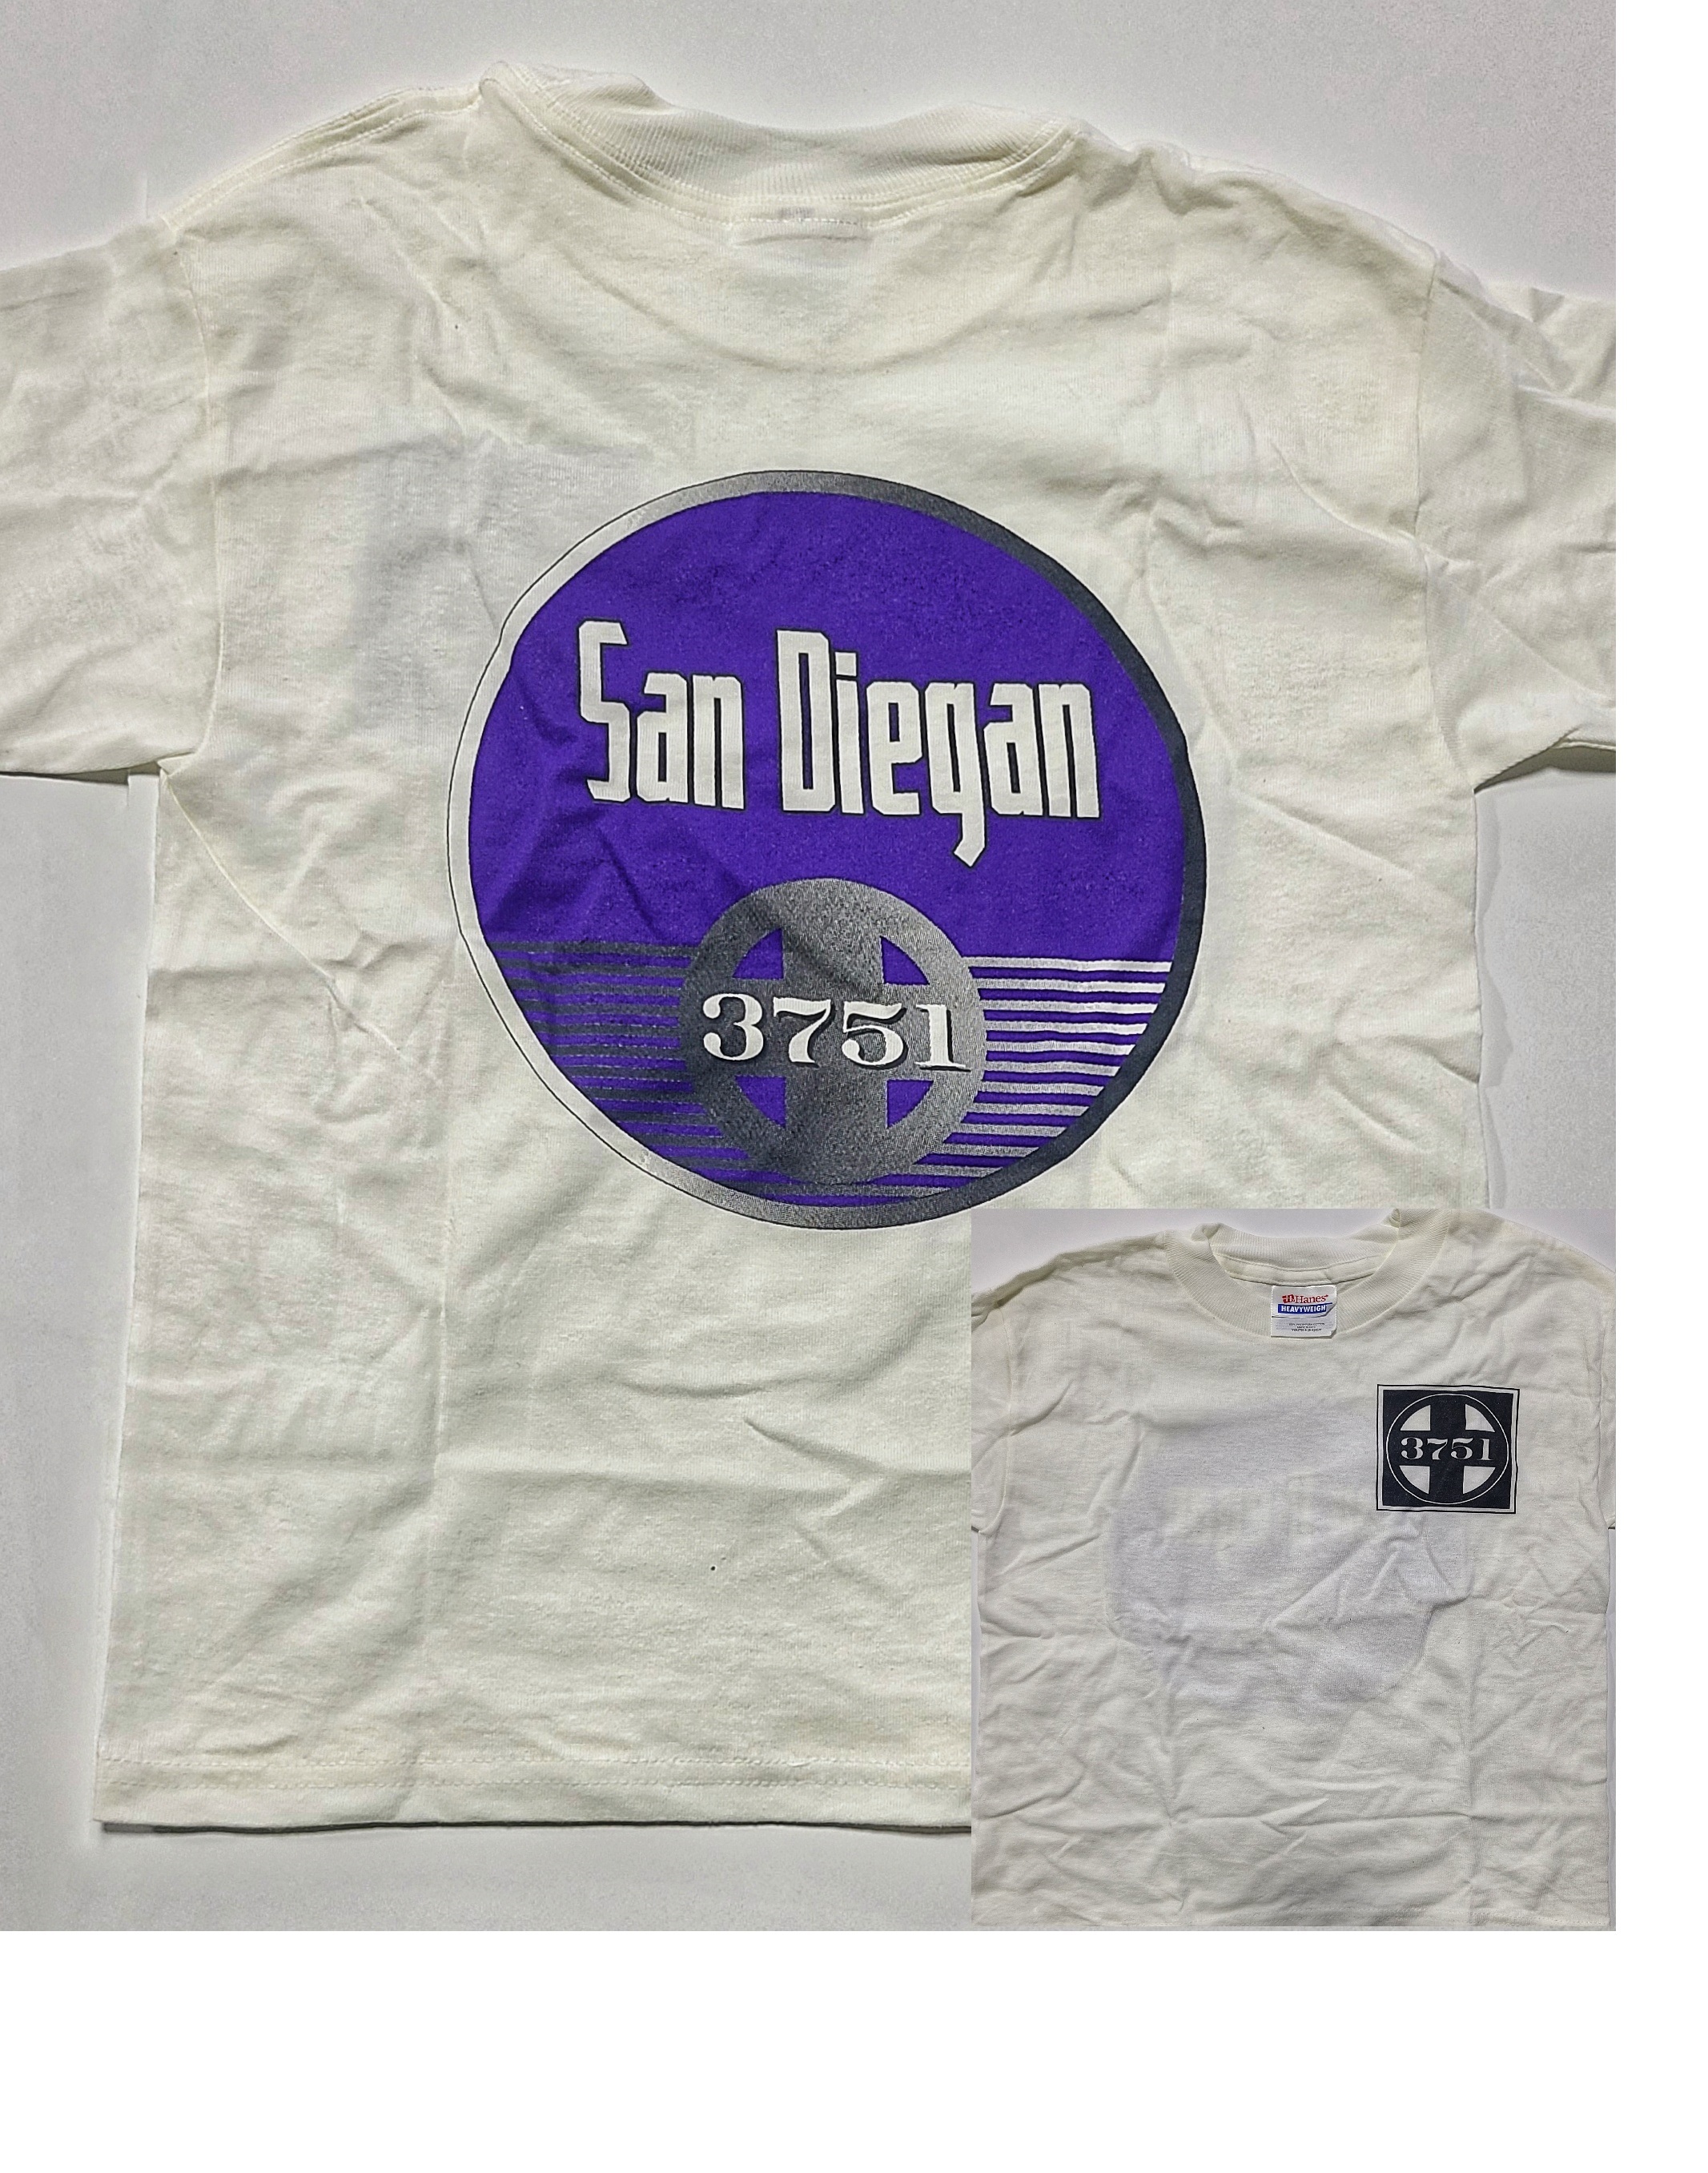 Adult "San Diegan Drumhead" T Shirt White - Medium